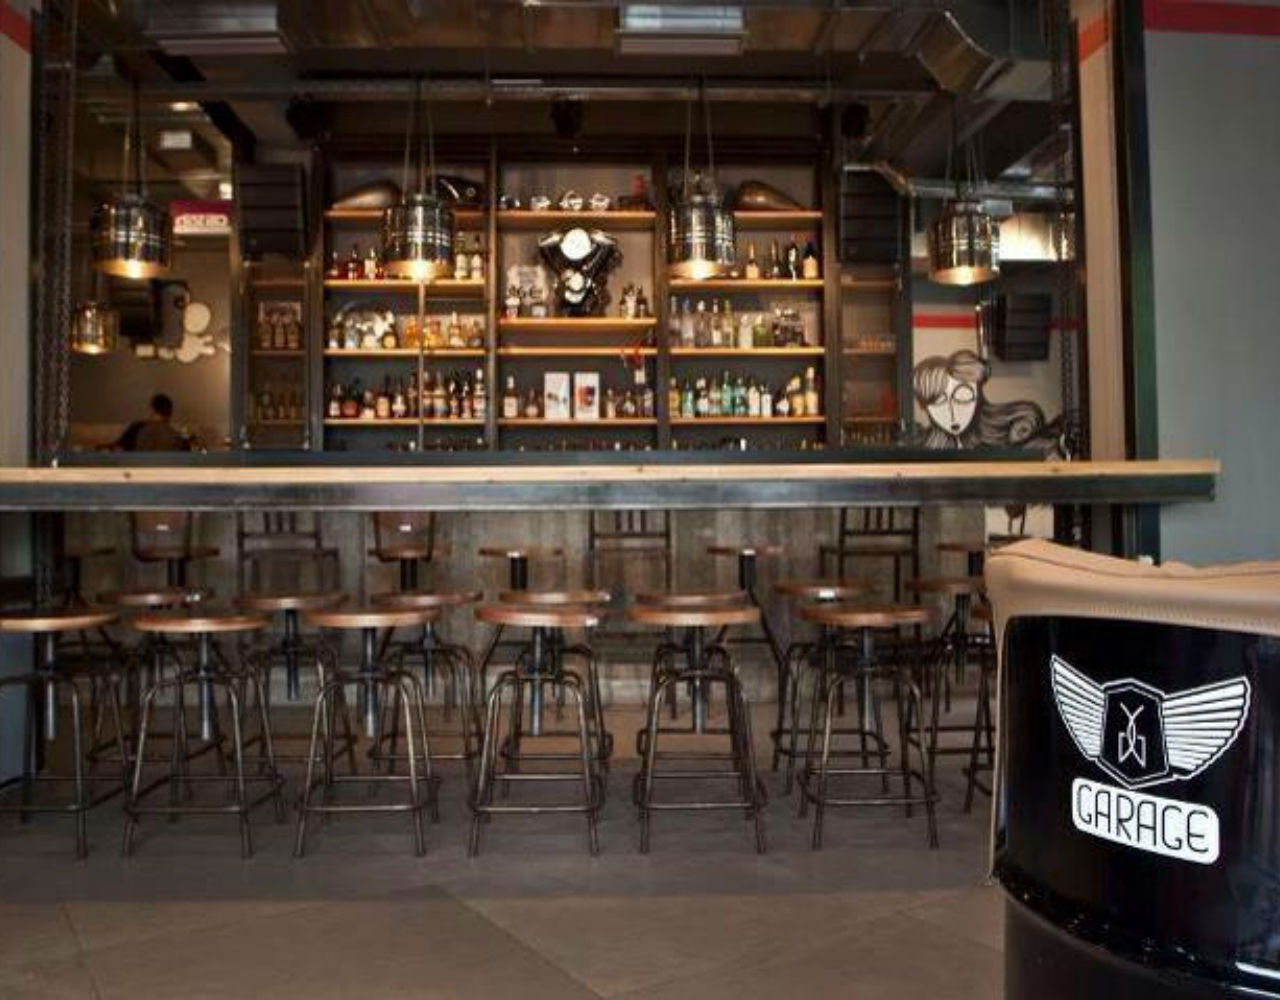 Garage, το cafe- bar που άλλαξε το χάρτη της διασκέδασης στην Ηλιούπολη